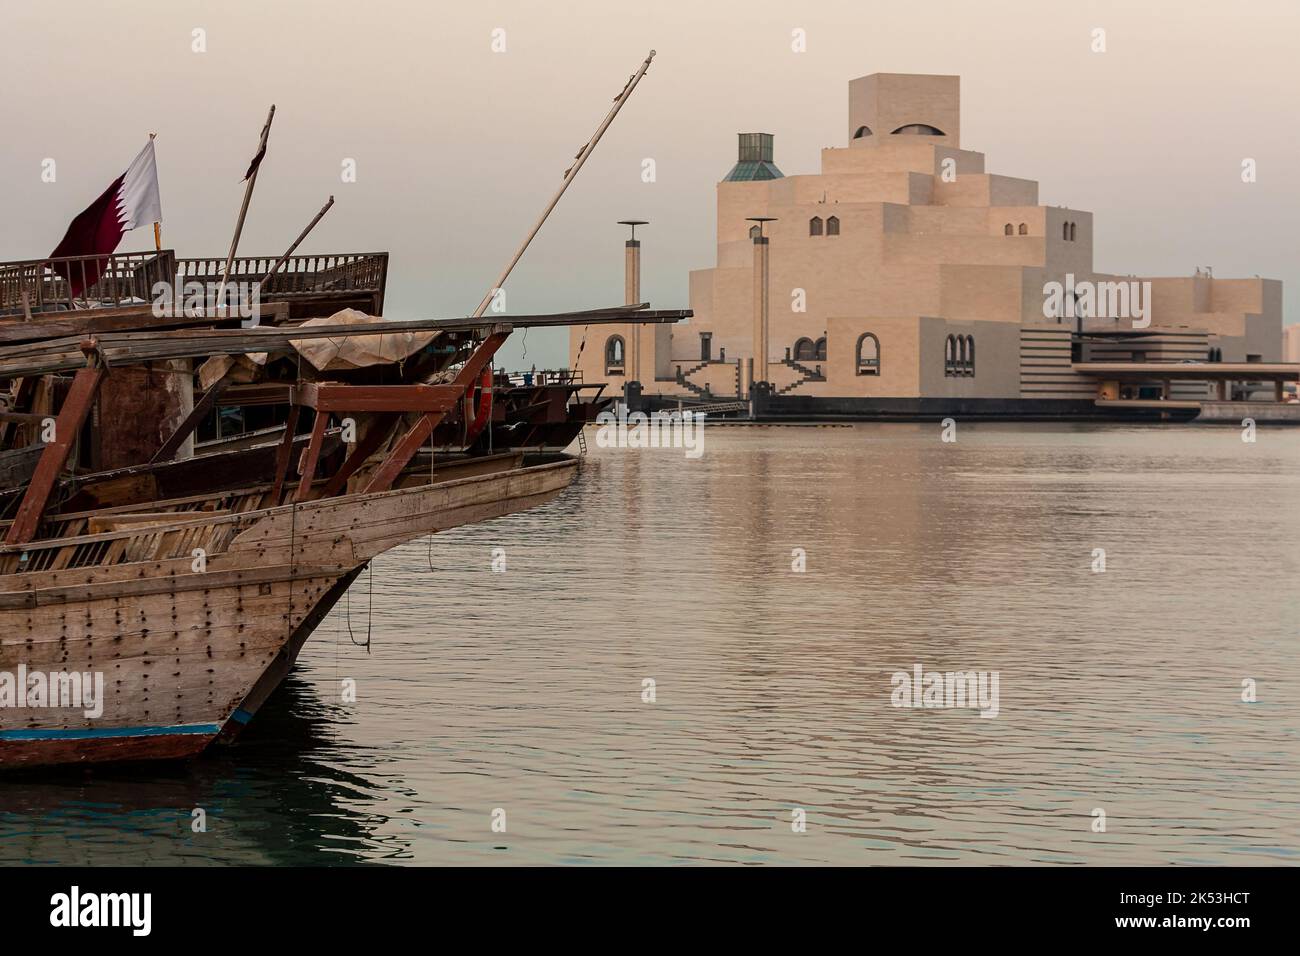 DOHA, QATAR - NOVEMBER 24 2008: The Museum of Islamic Art and traditional dhow boats, with Qatari flags in Doha, Qatar Stock Photo